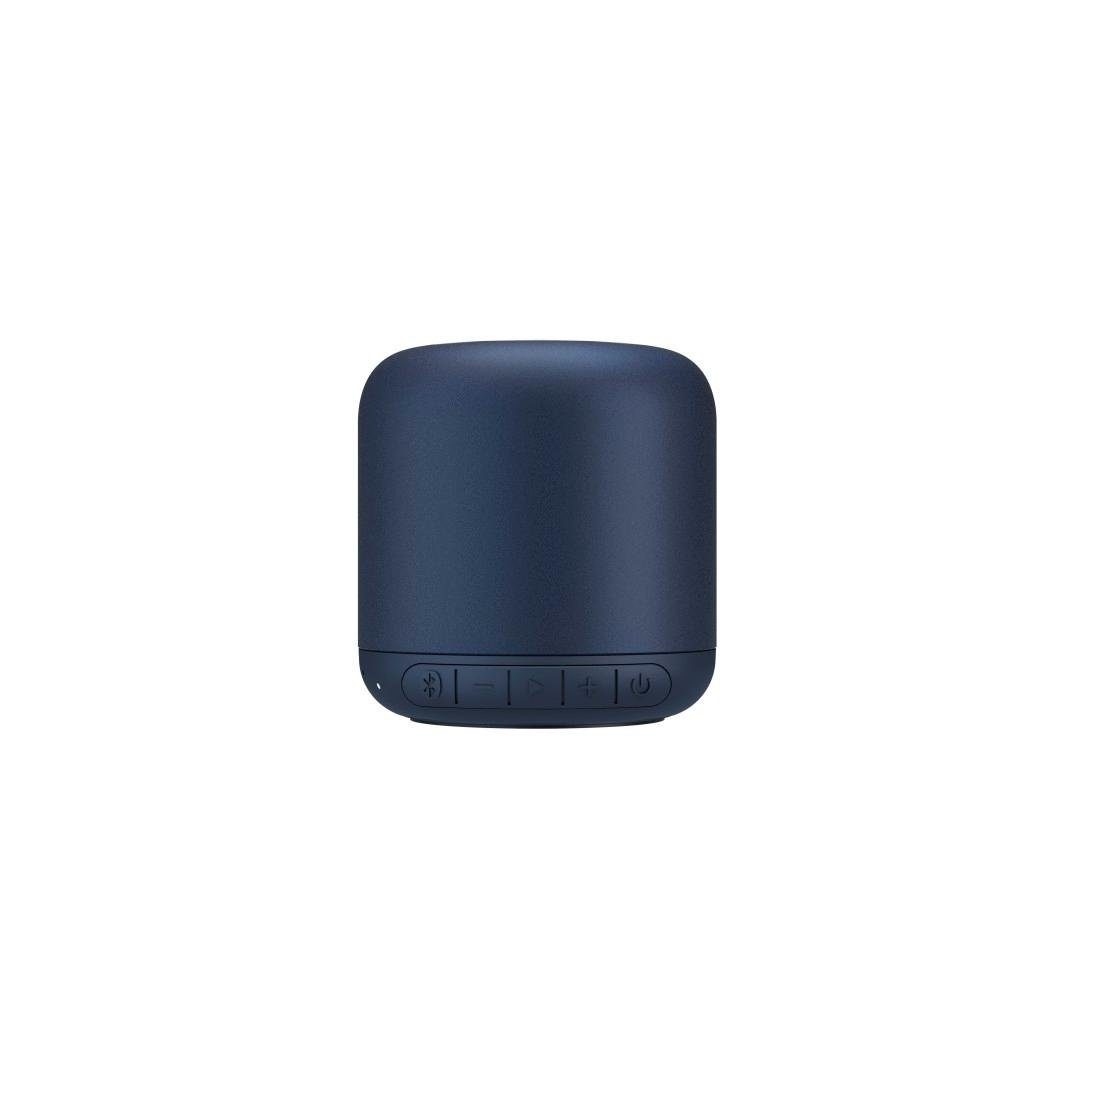 Bluetooth, Aluminiumgehäuse) Robustes Bluetooth® Hama blau "Drum Lautsprecher (A2DP Bluetooth-Lautsprecher AVRCP HFP, Integrierte W 2.0" Bluetooth, Freisprecheinrichtung) (3,5